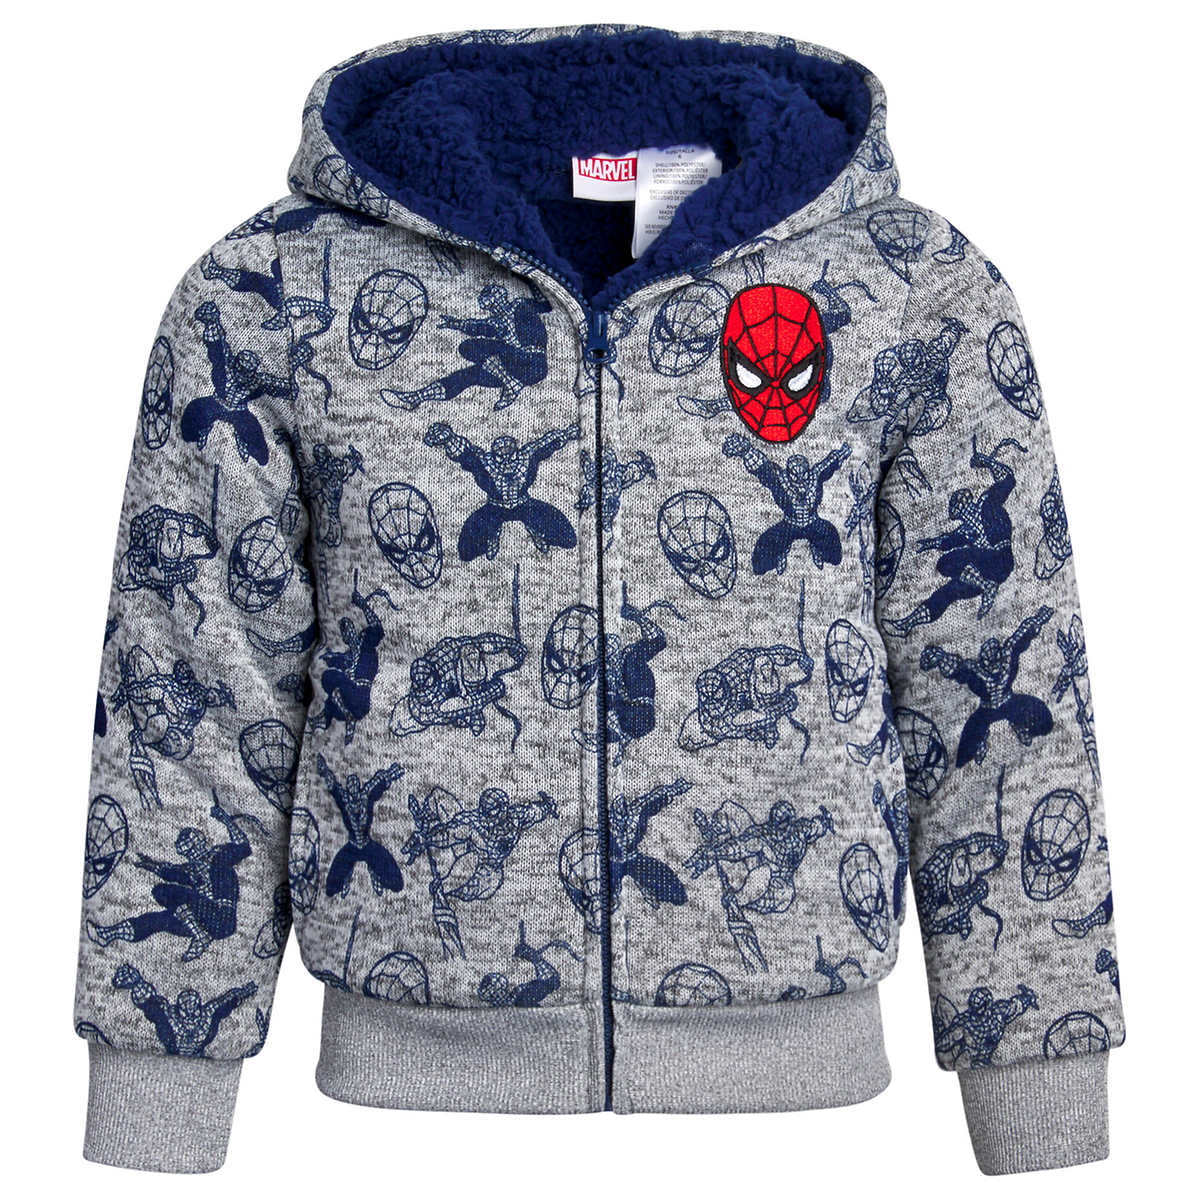 Spiderman Little Boys Full Zip Hooded Fleece Jacket Royal color size 6t 7t 